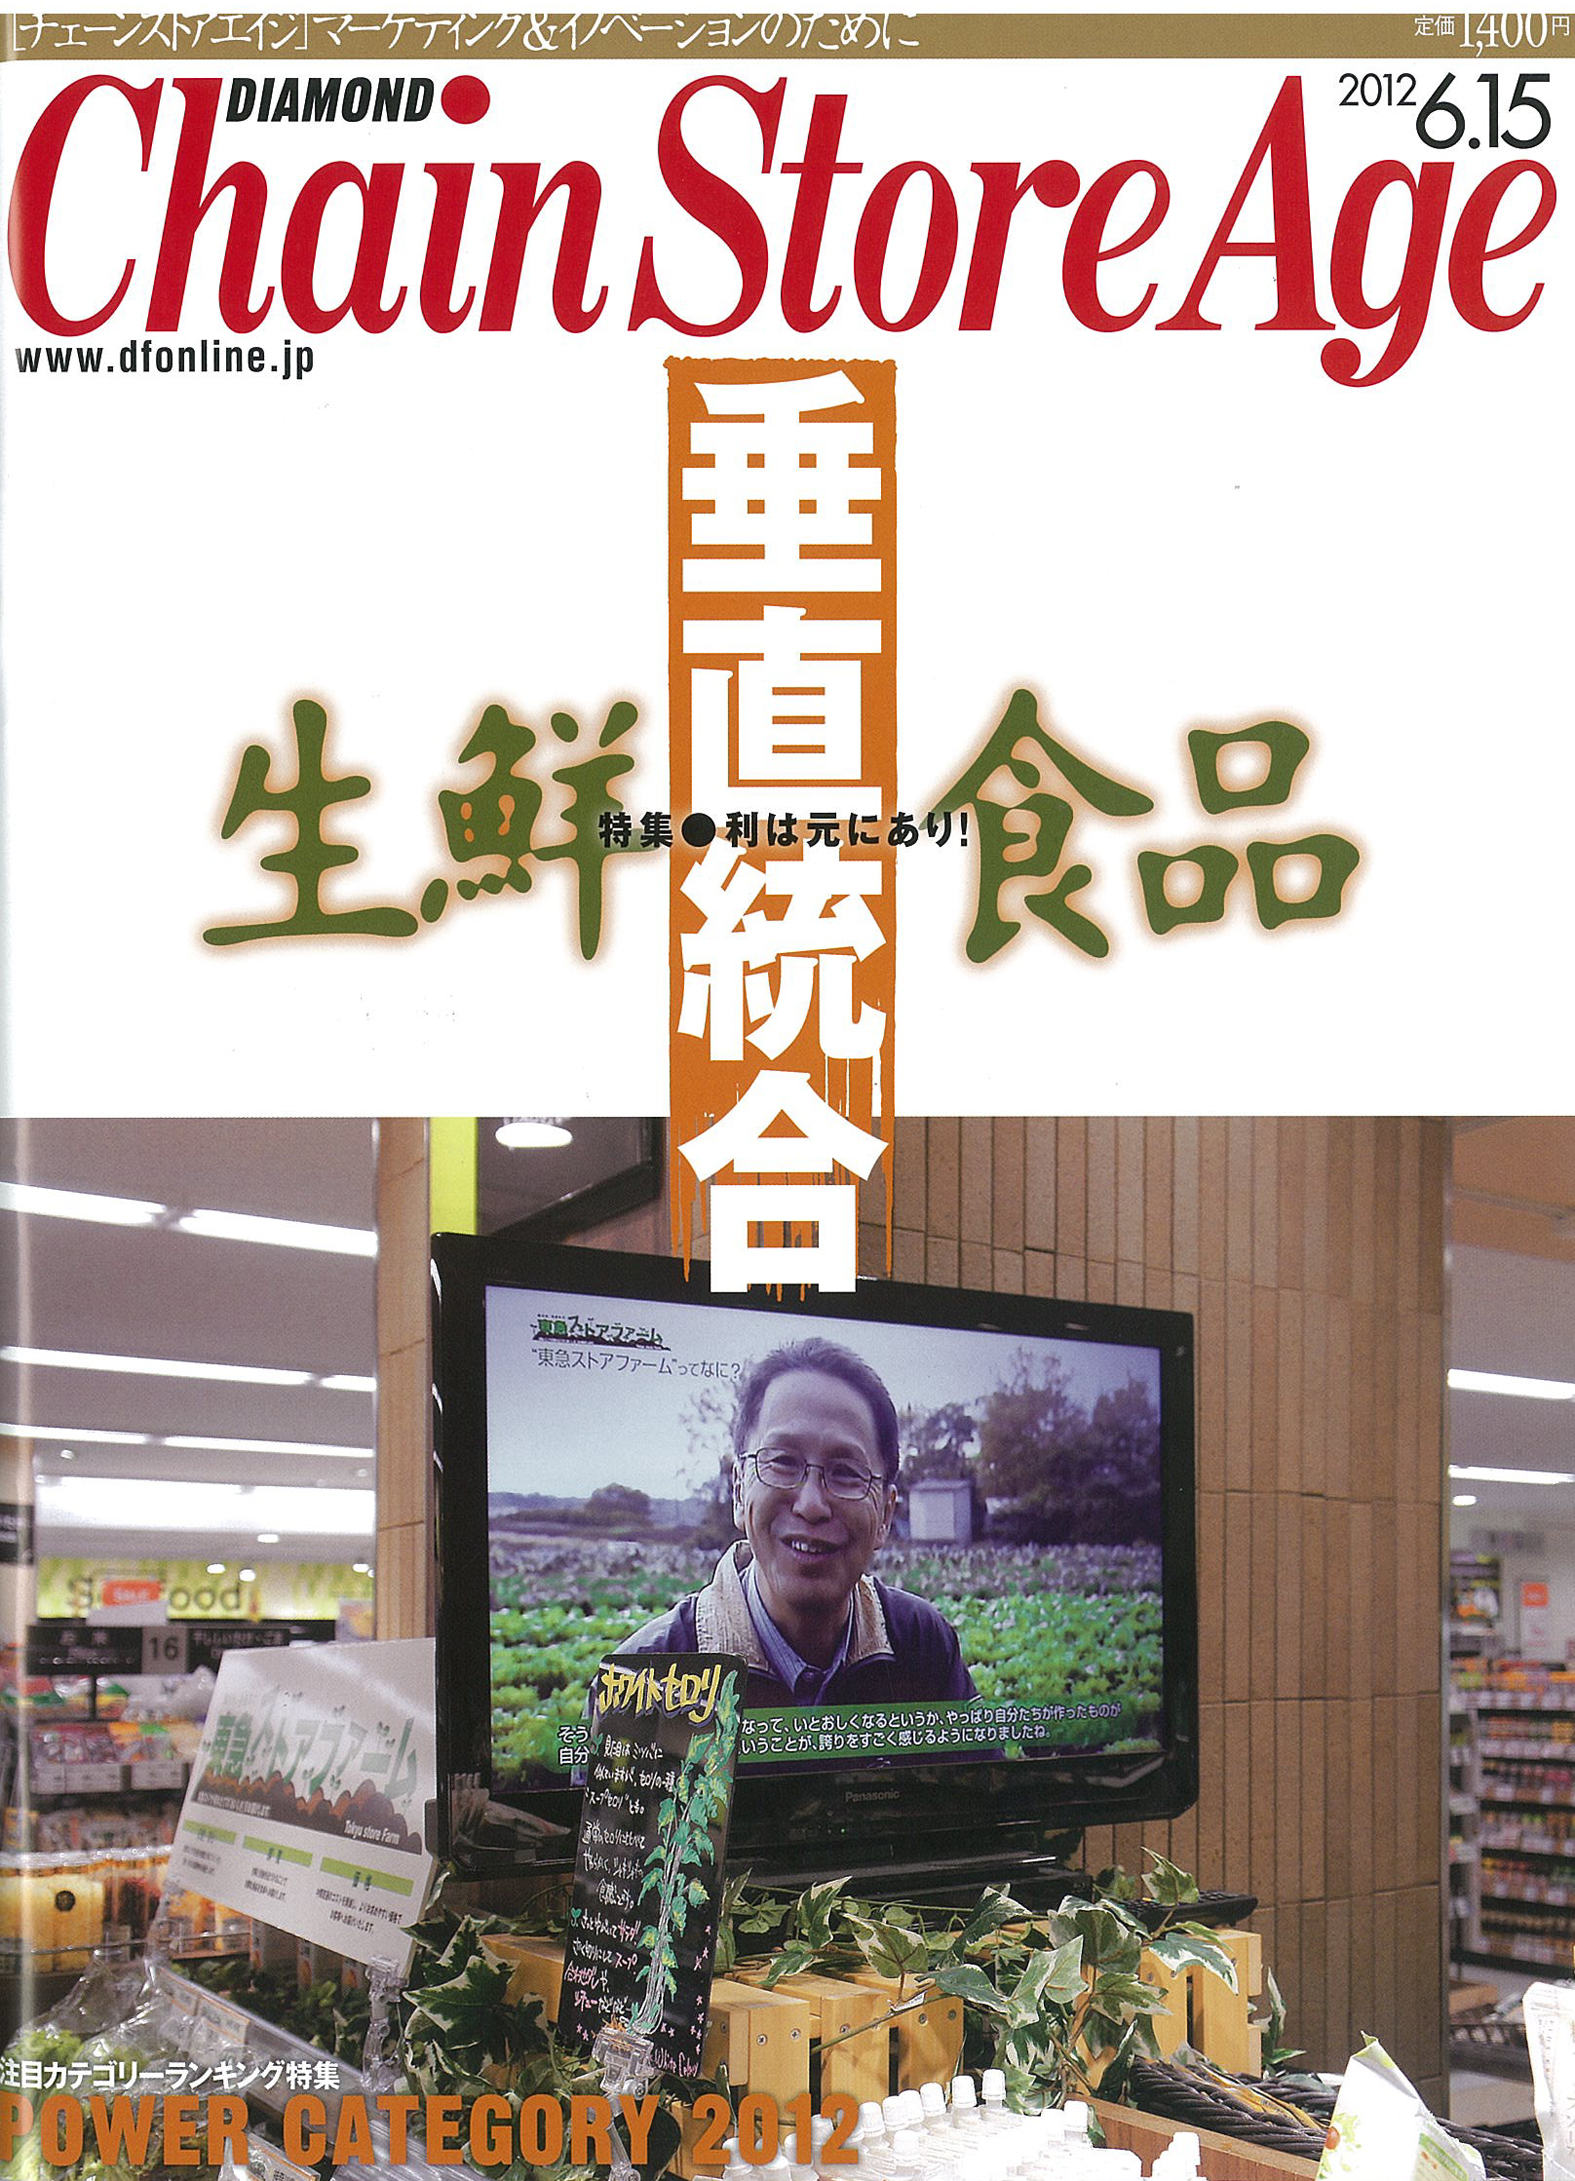 http://www.apcompany.jp/media/2012/06/30/chainstoreage_cover.jpg